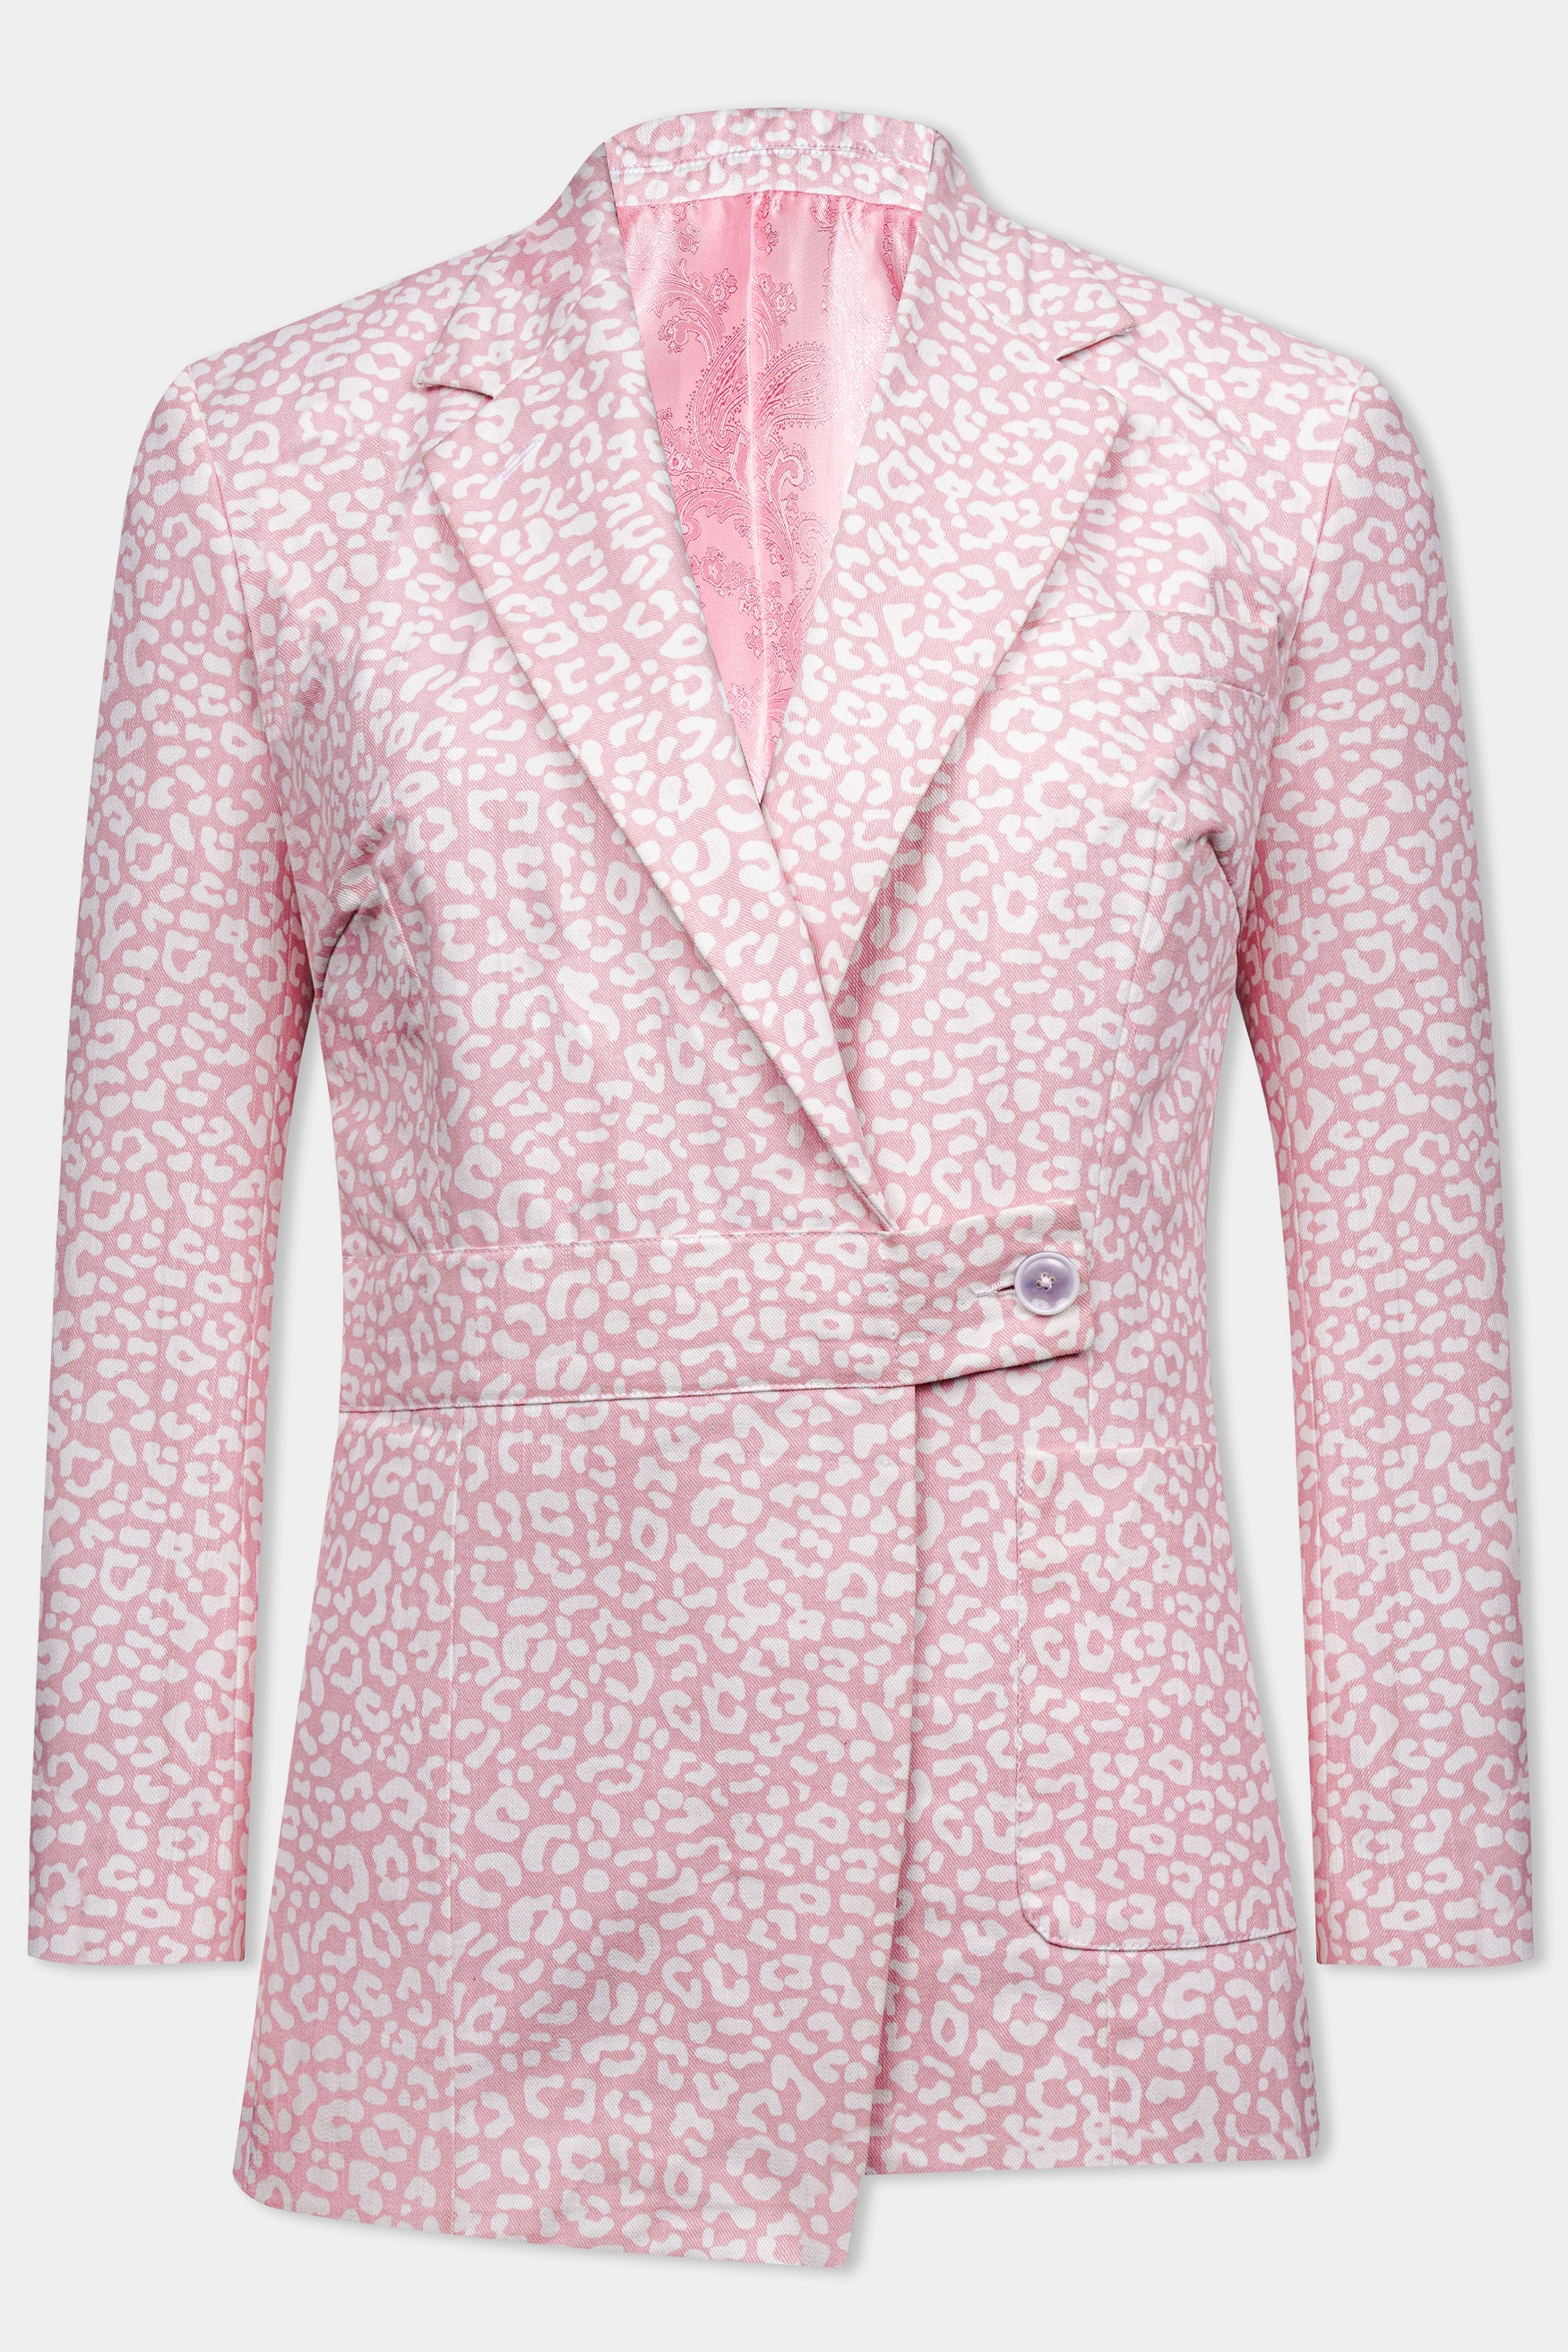 Thistle Pink and Bright White Animal Printed Premium Cotton Women’s Designer Blazer